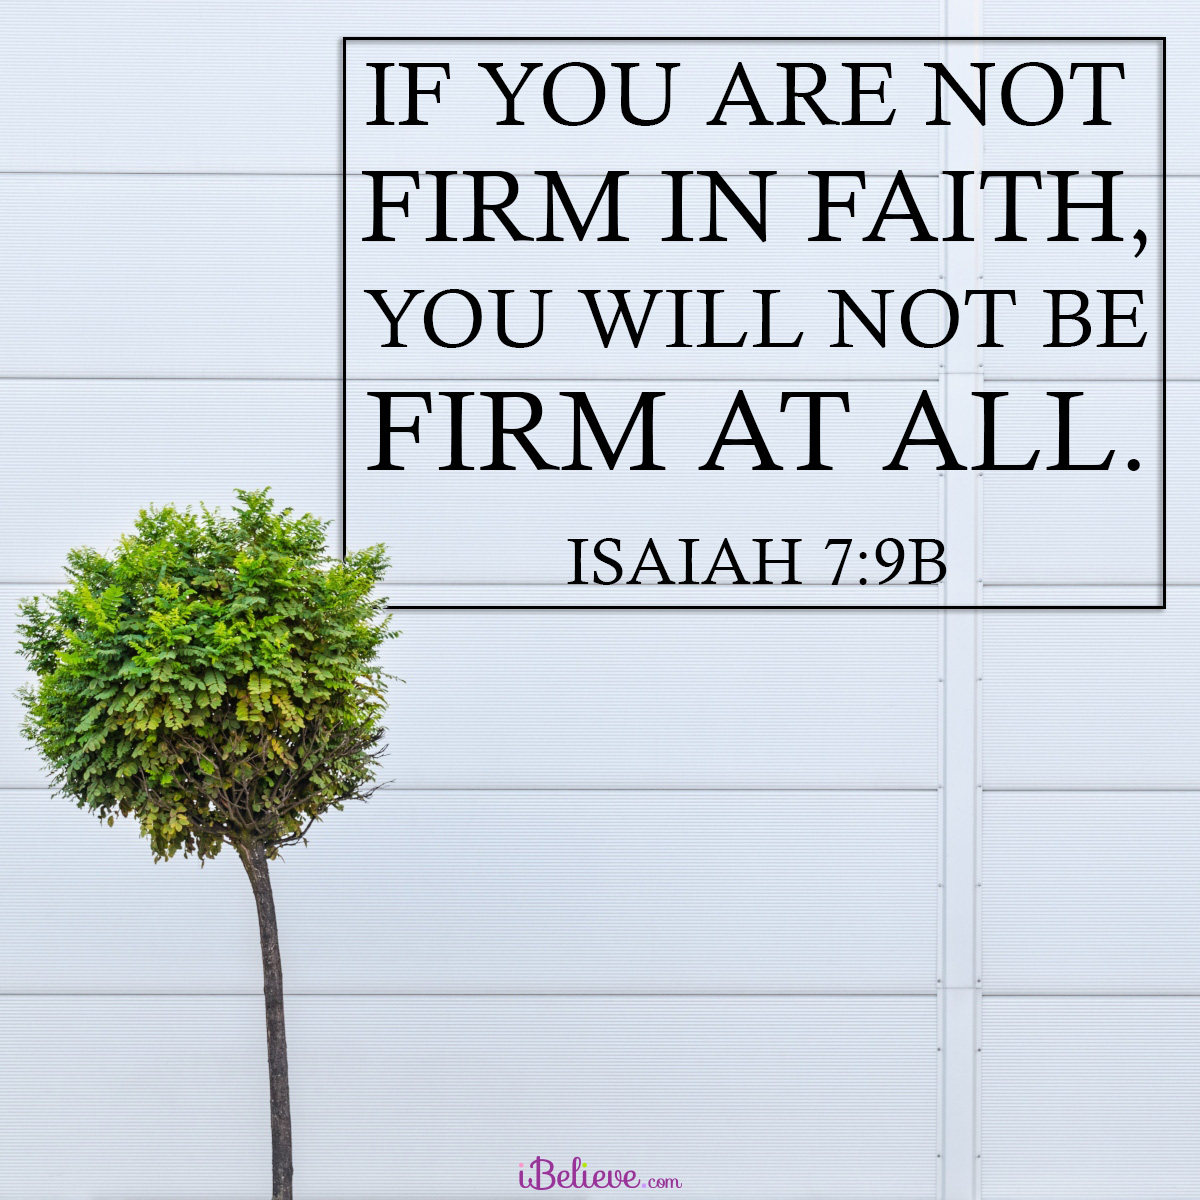 Isaiah 7:9b, inspirational image